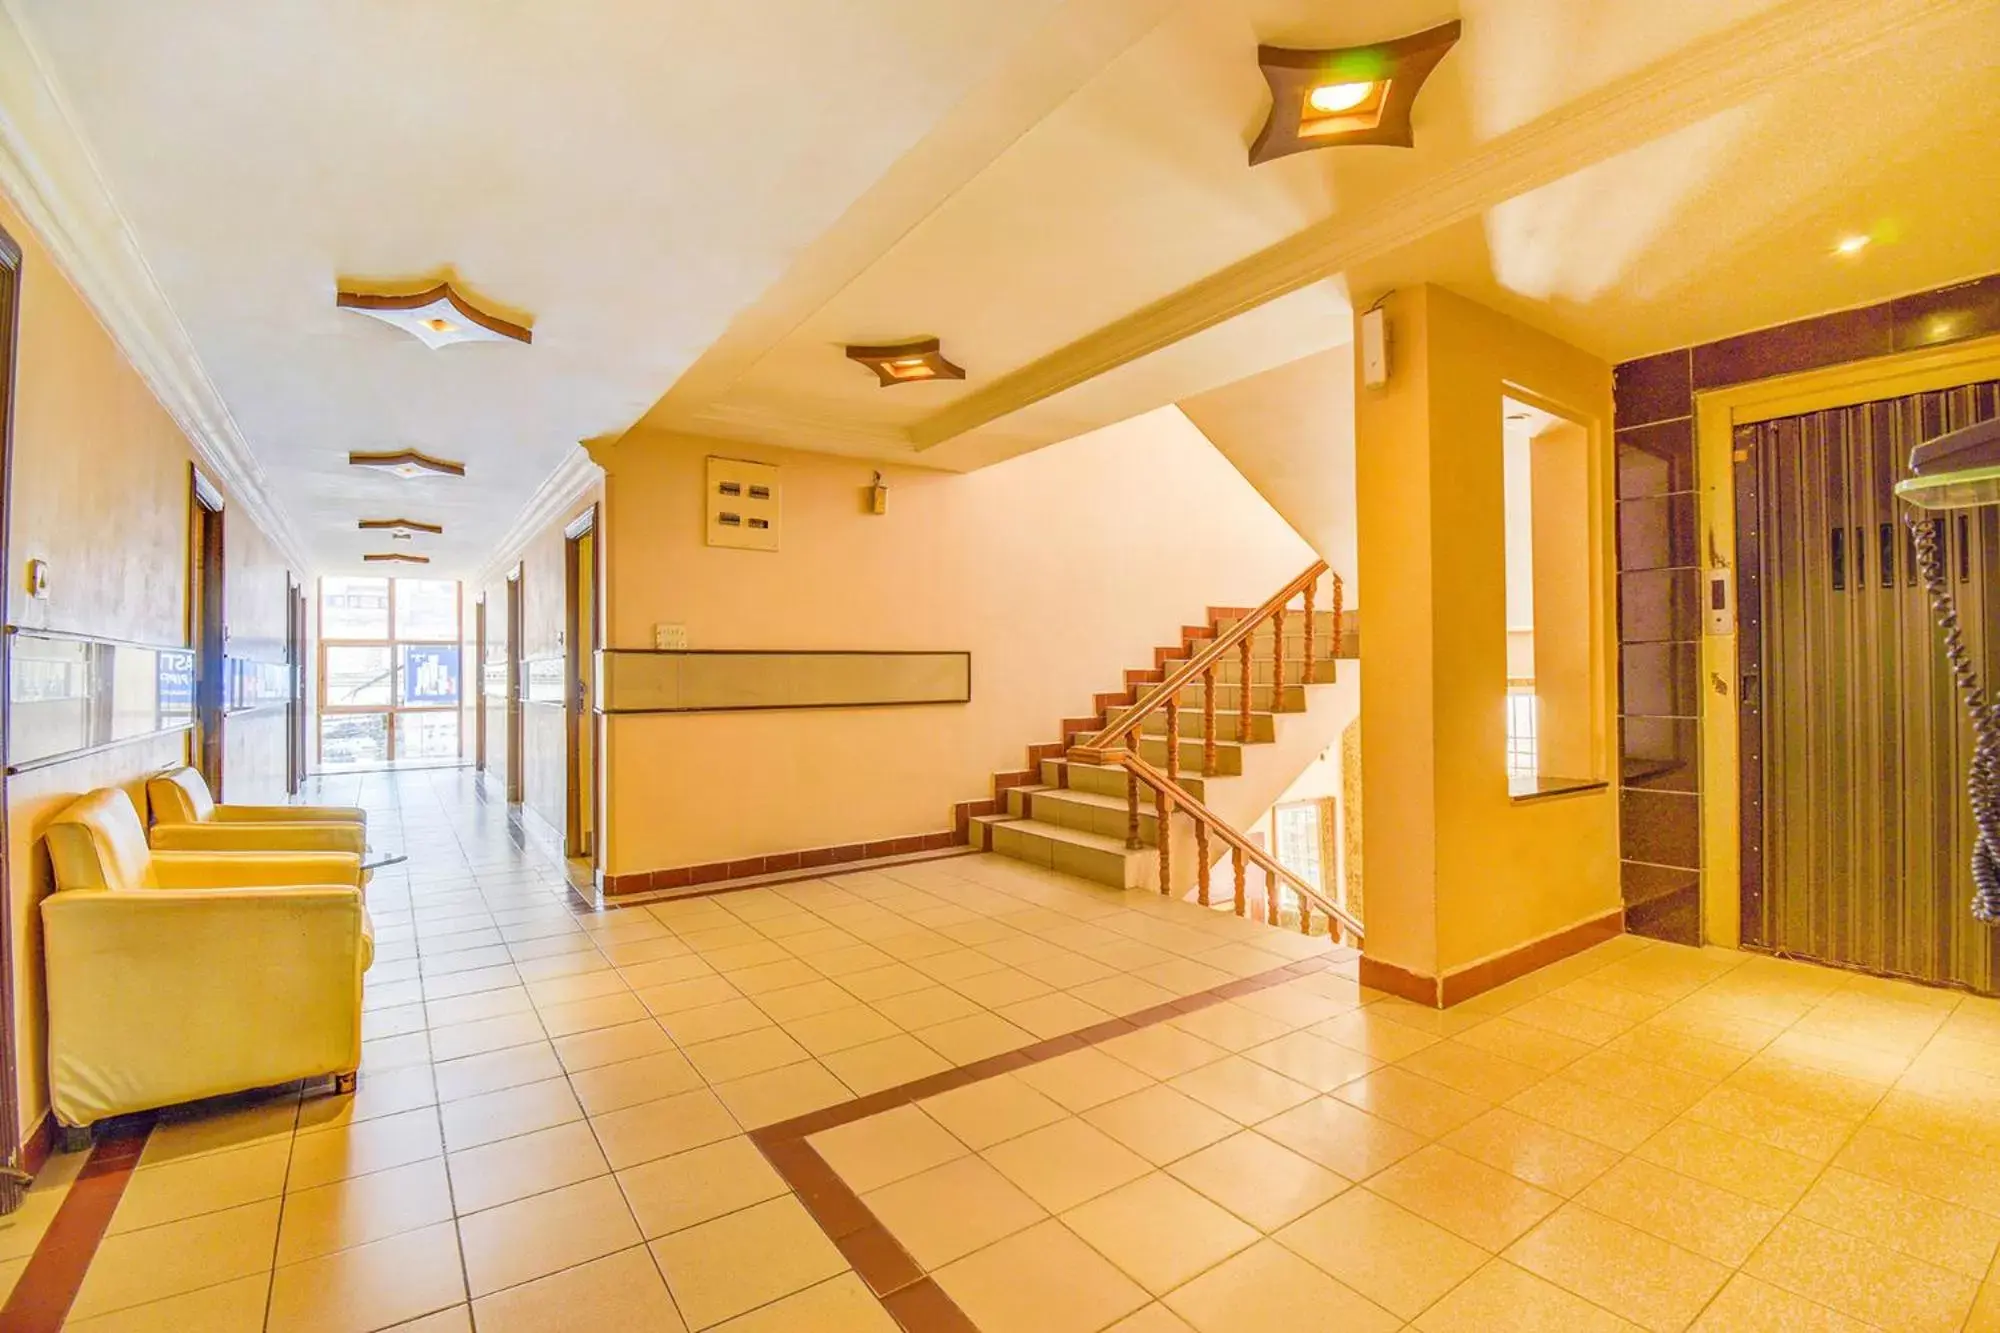 Lobby or reception in FabHotel Kinnera Comforts Railway Station